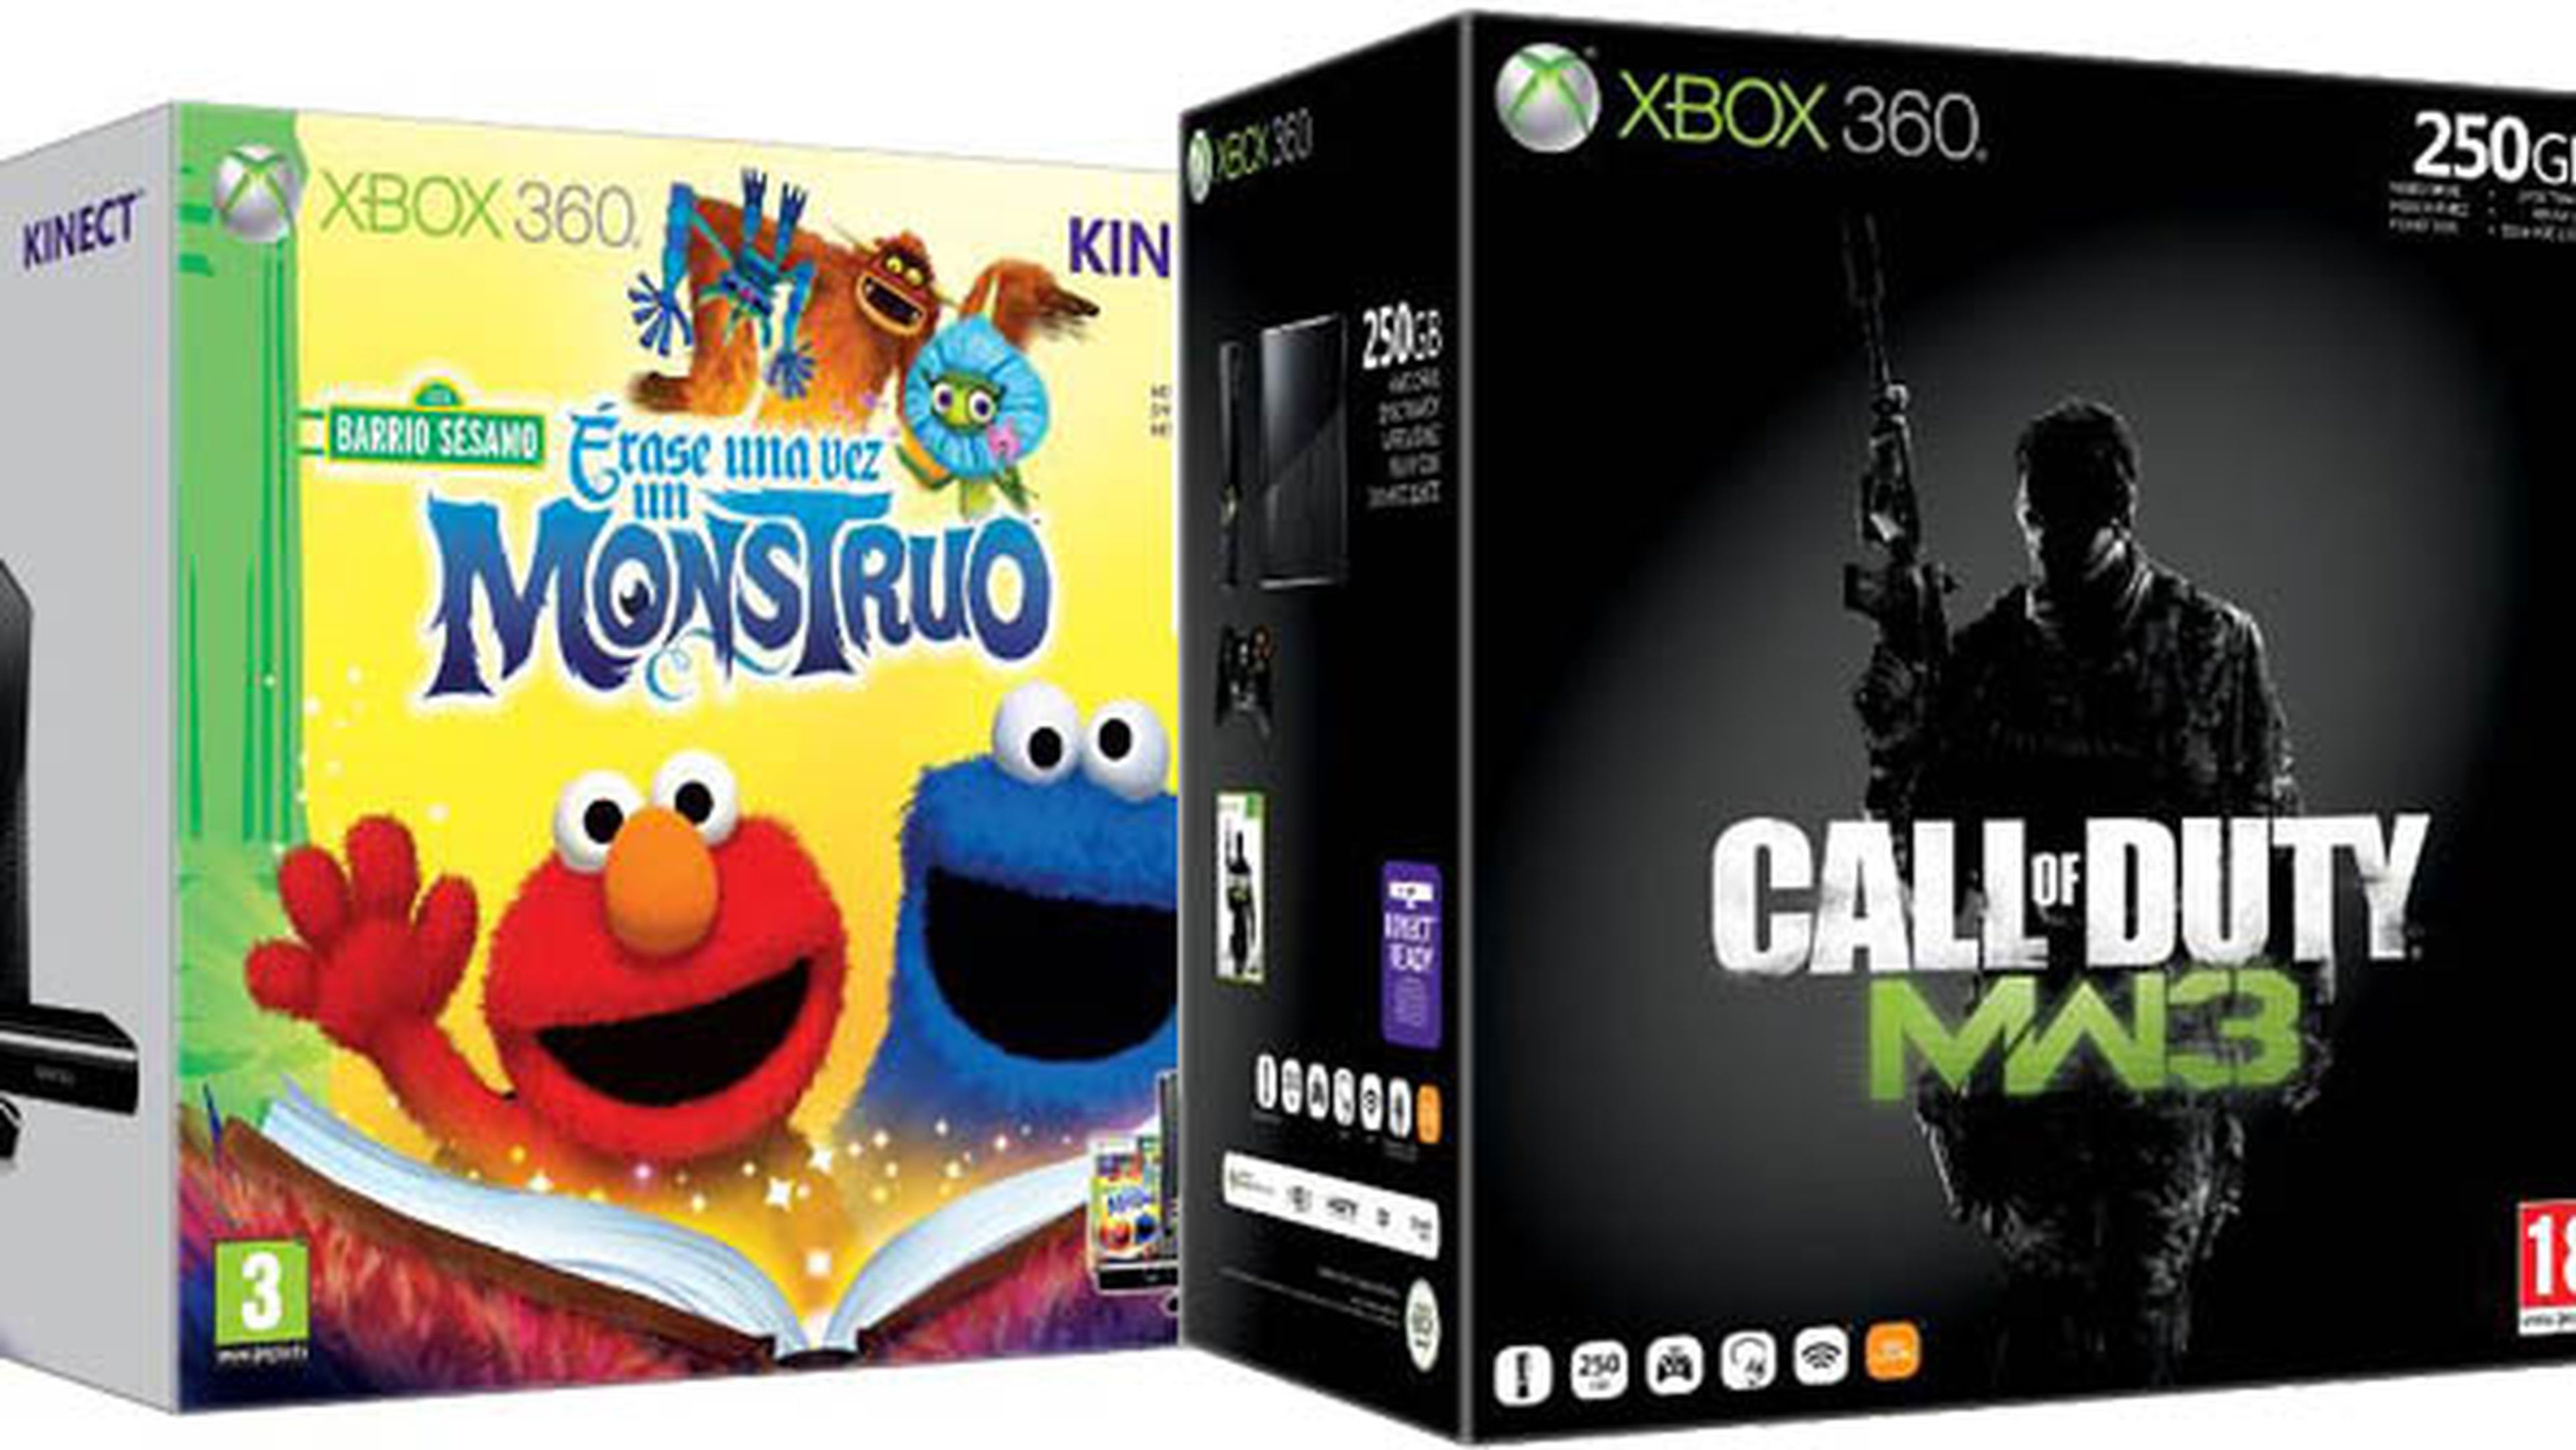 Packs Xbox 360 para Navidad 2011